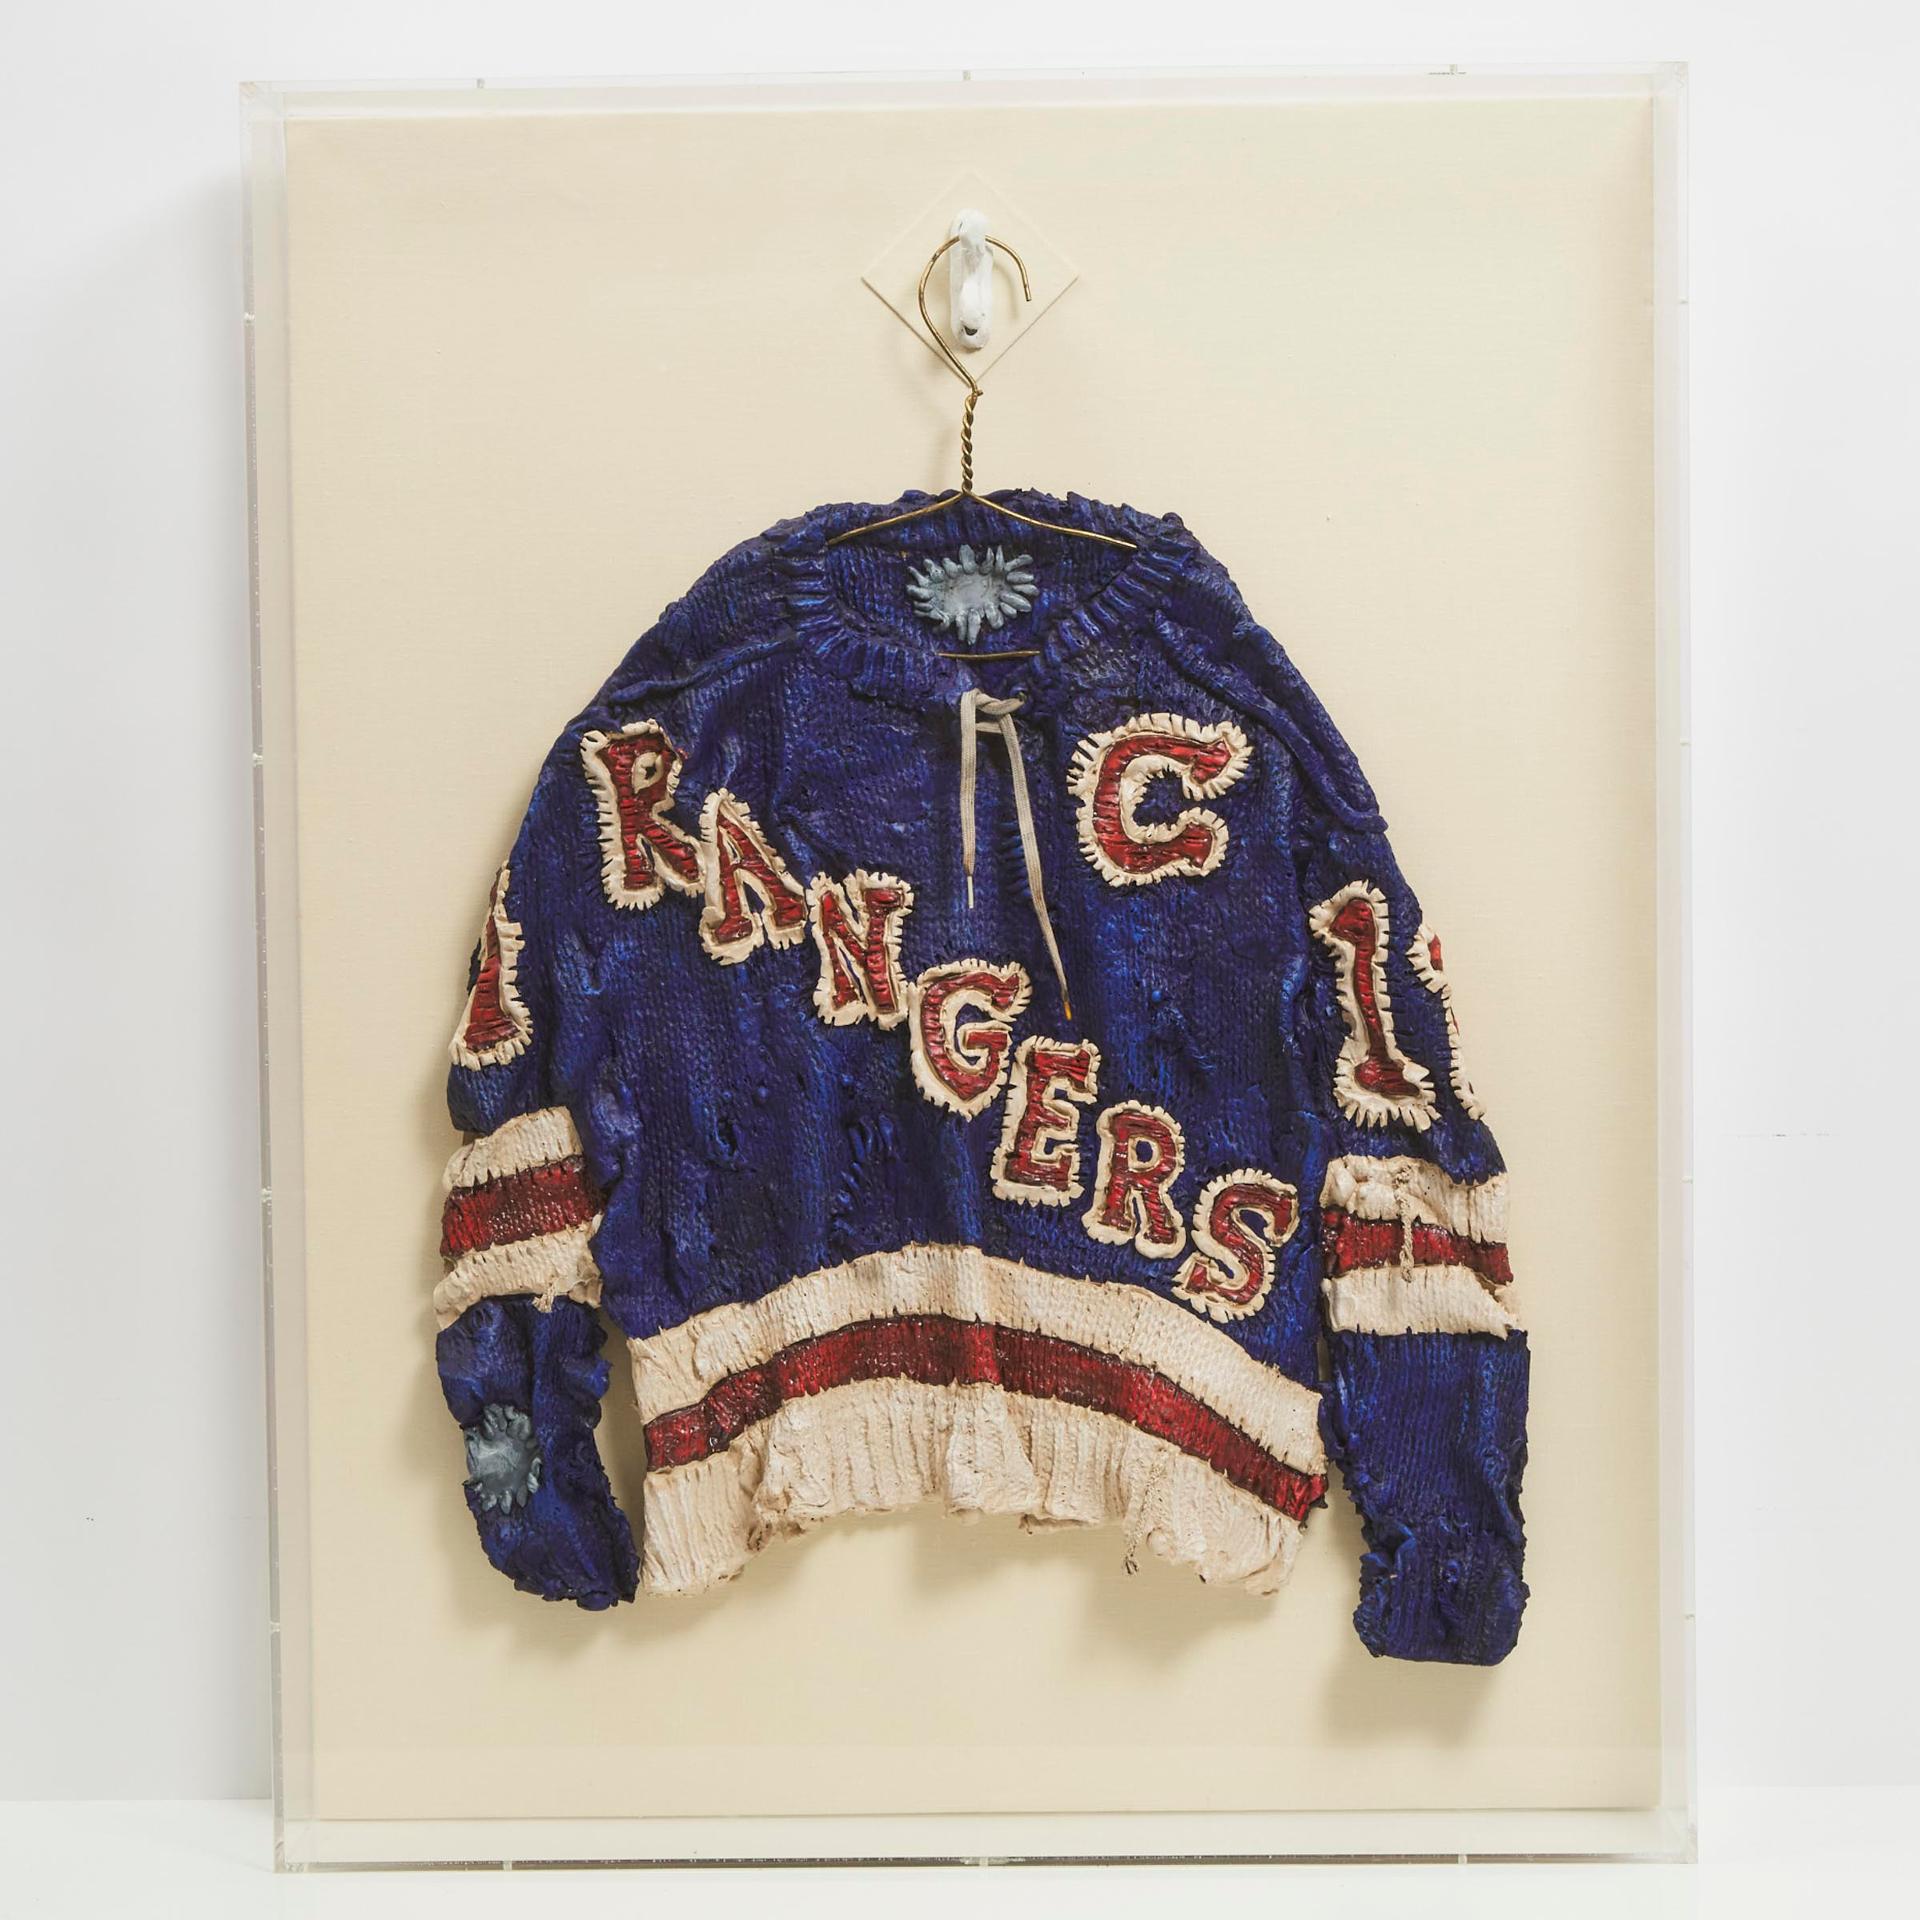 Patrick Amiot (1960) - New York Rangers Jersey #11, 1995